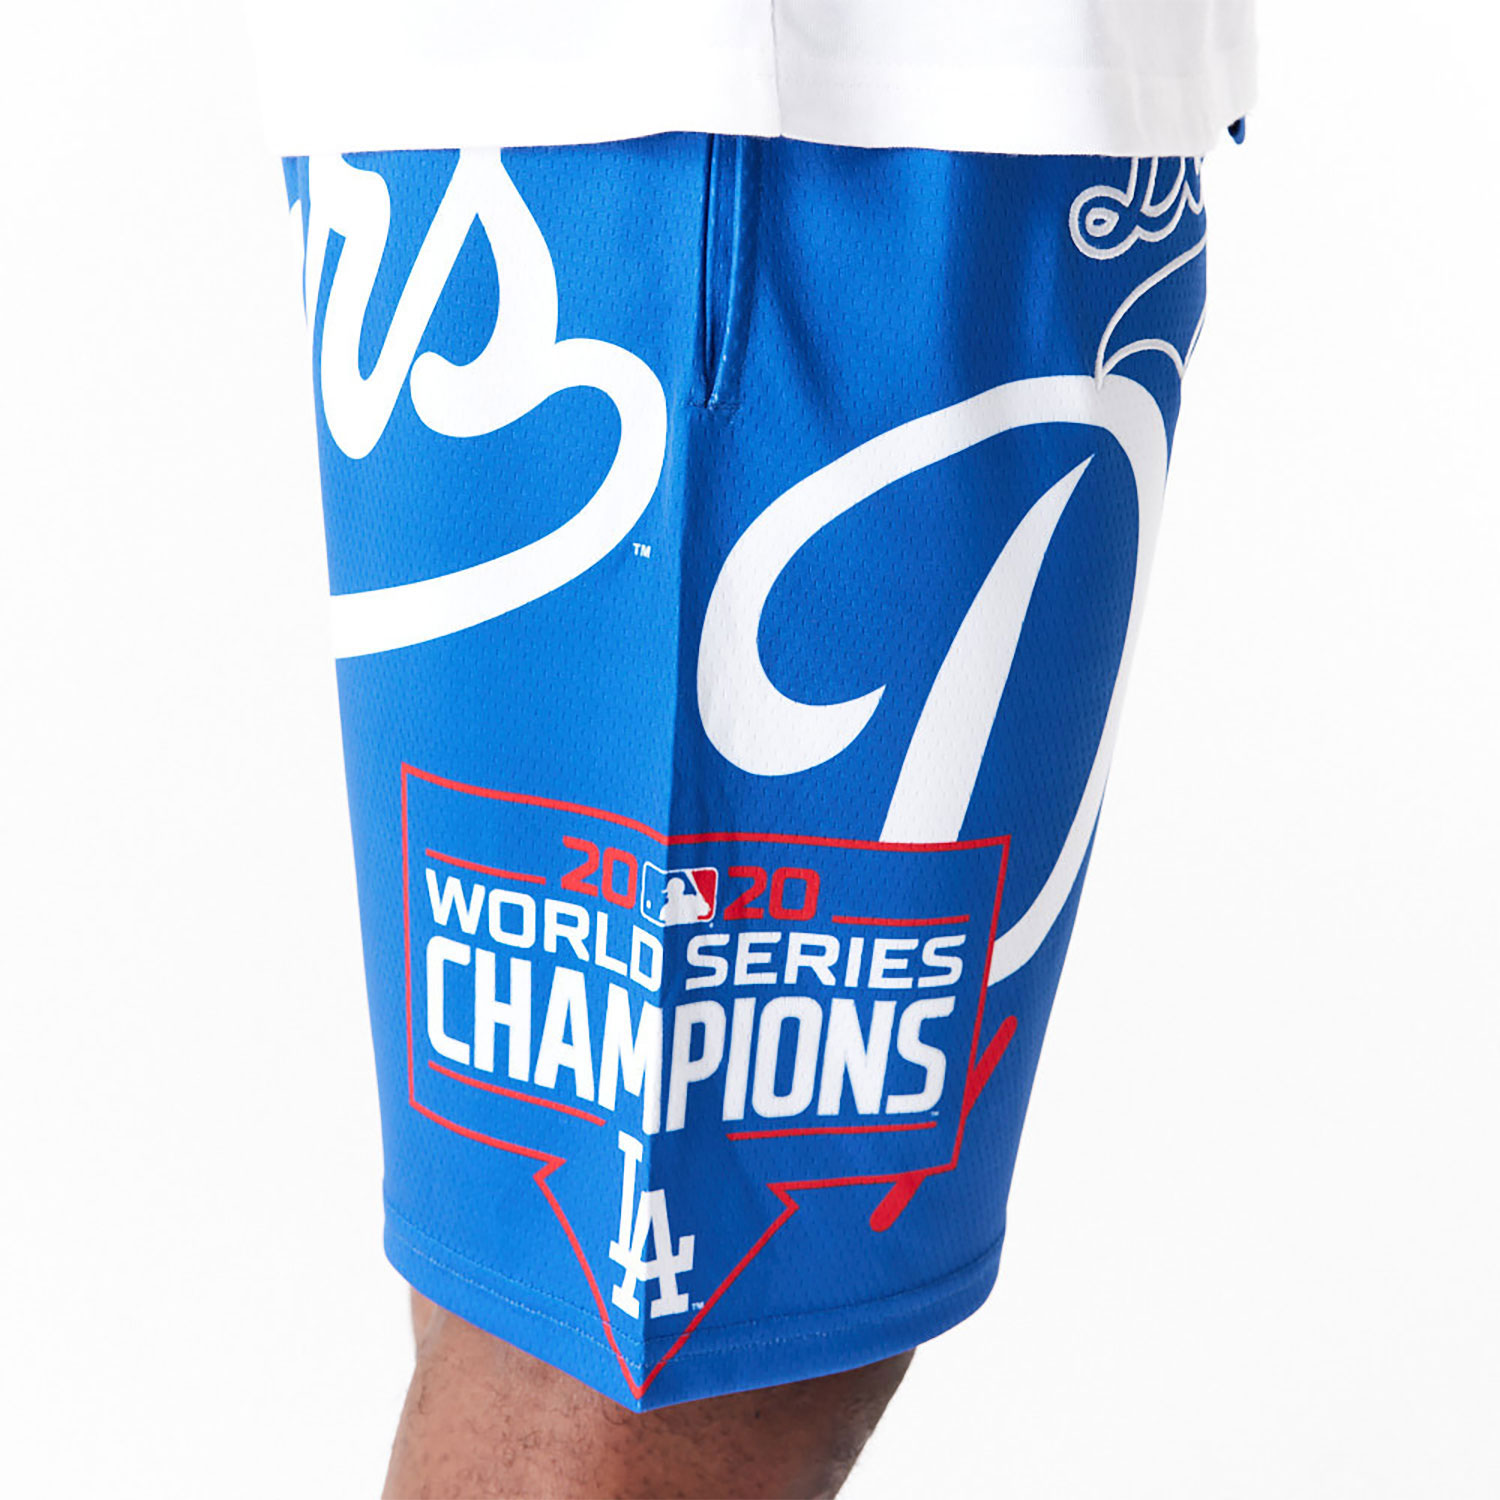 LA Dodgers MLB Large Logo Blue Shorts